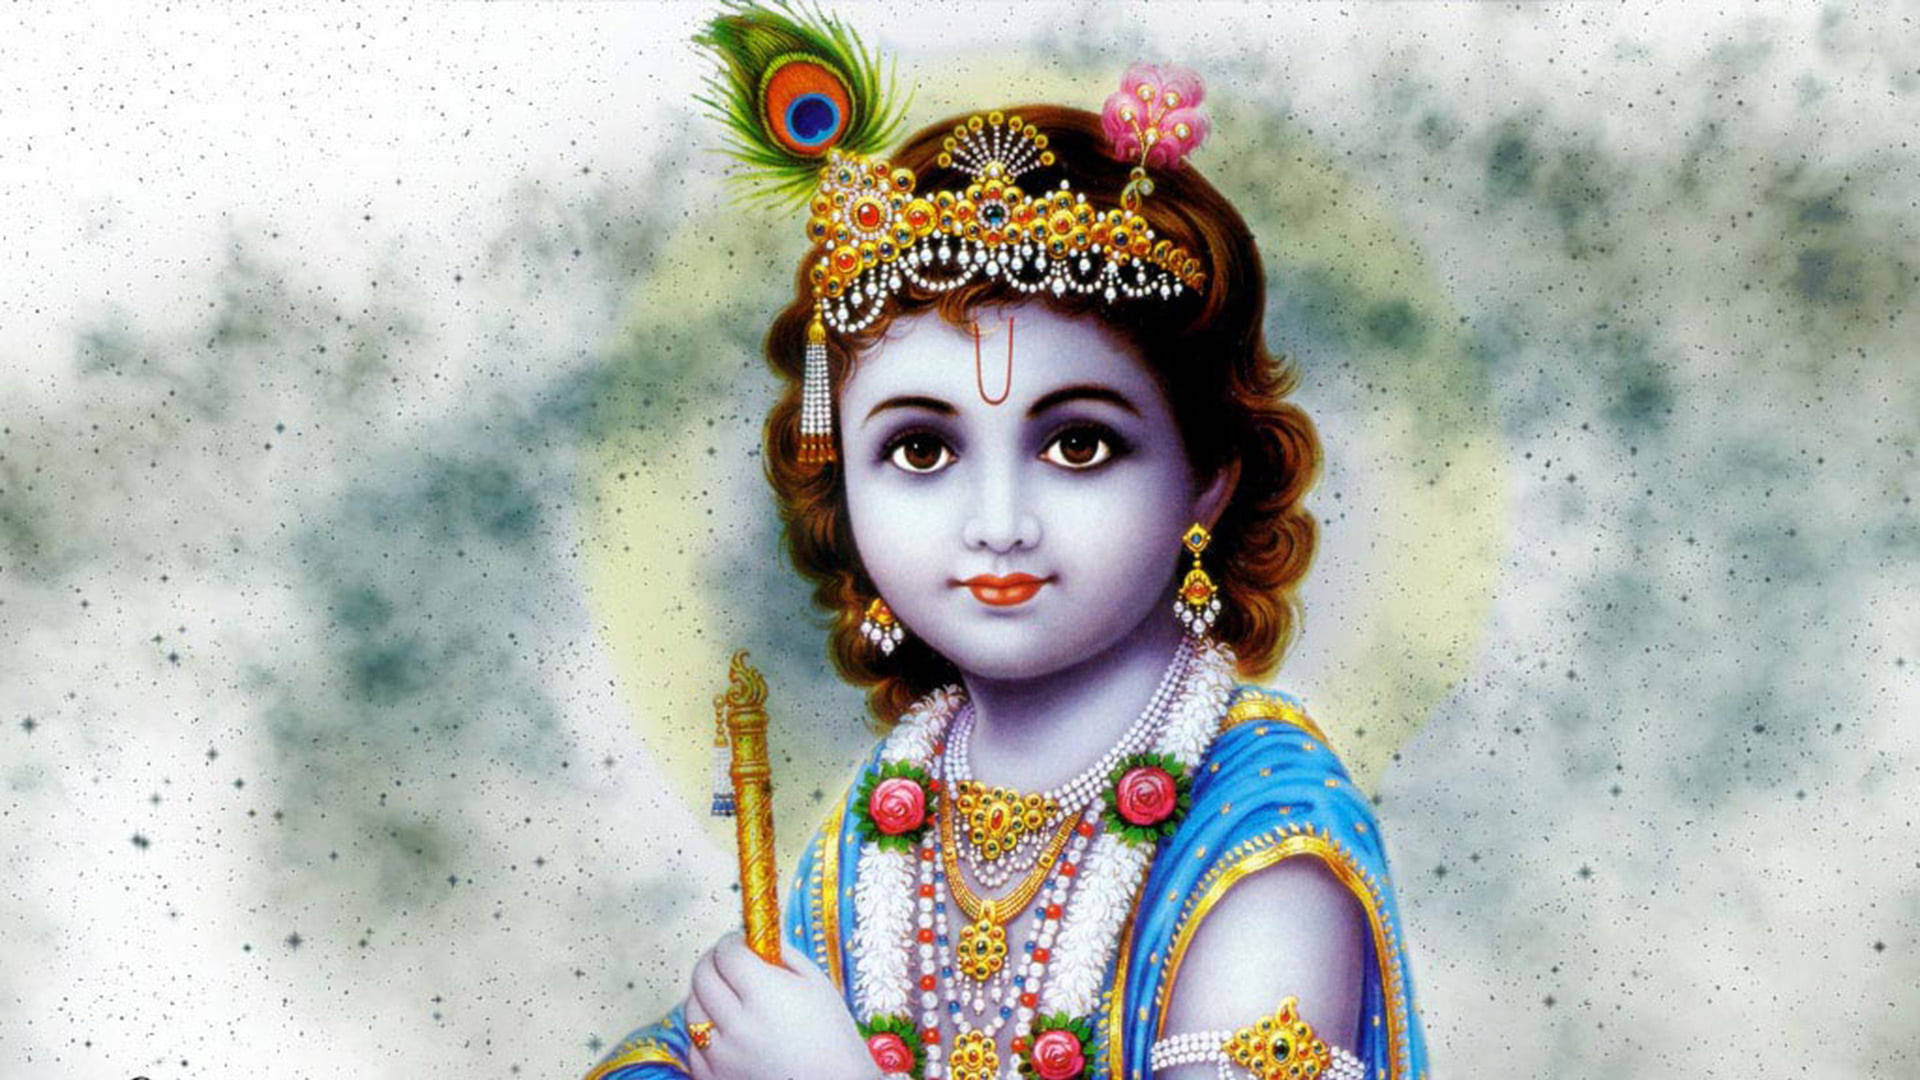 Amazing Baby Krishna 4k Wallpaper